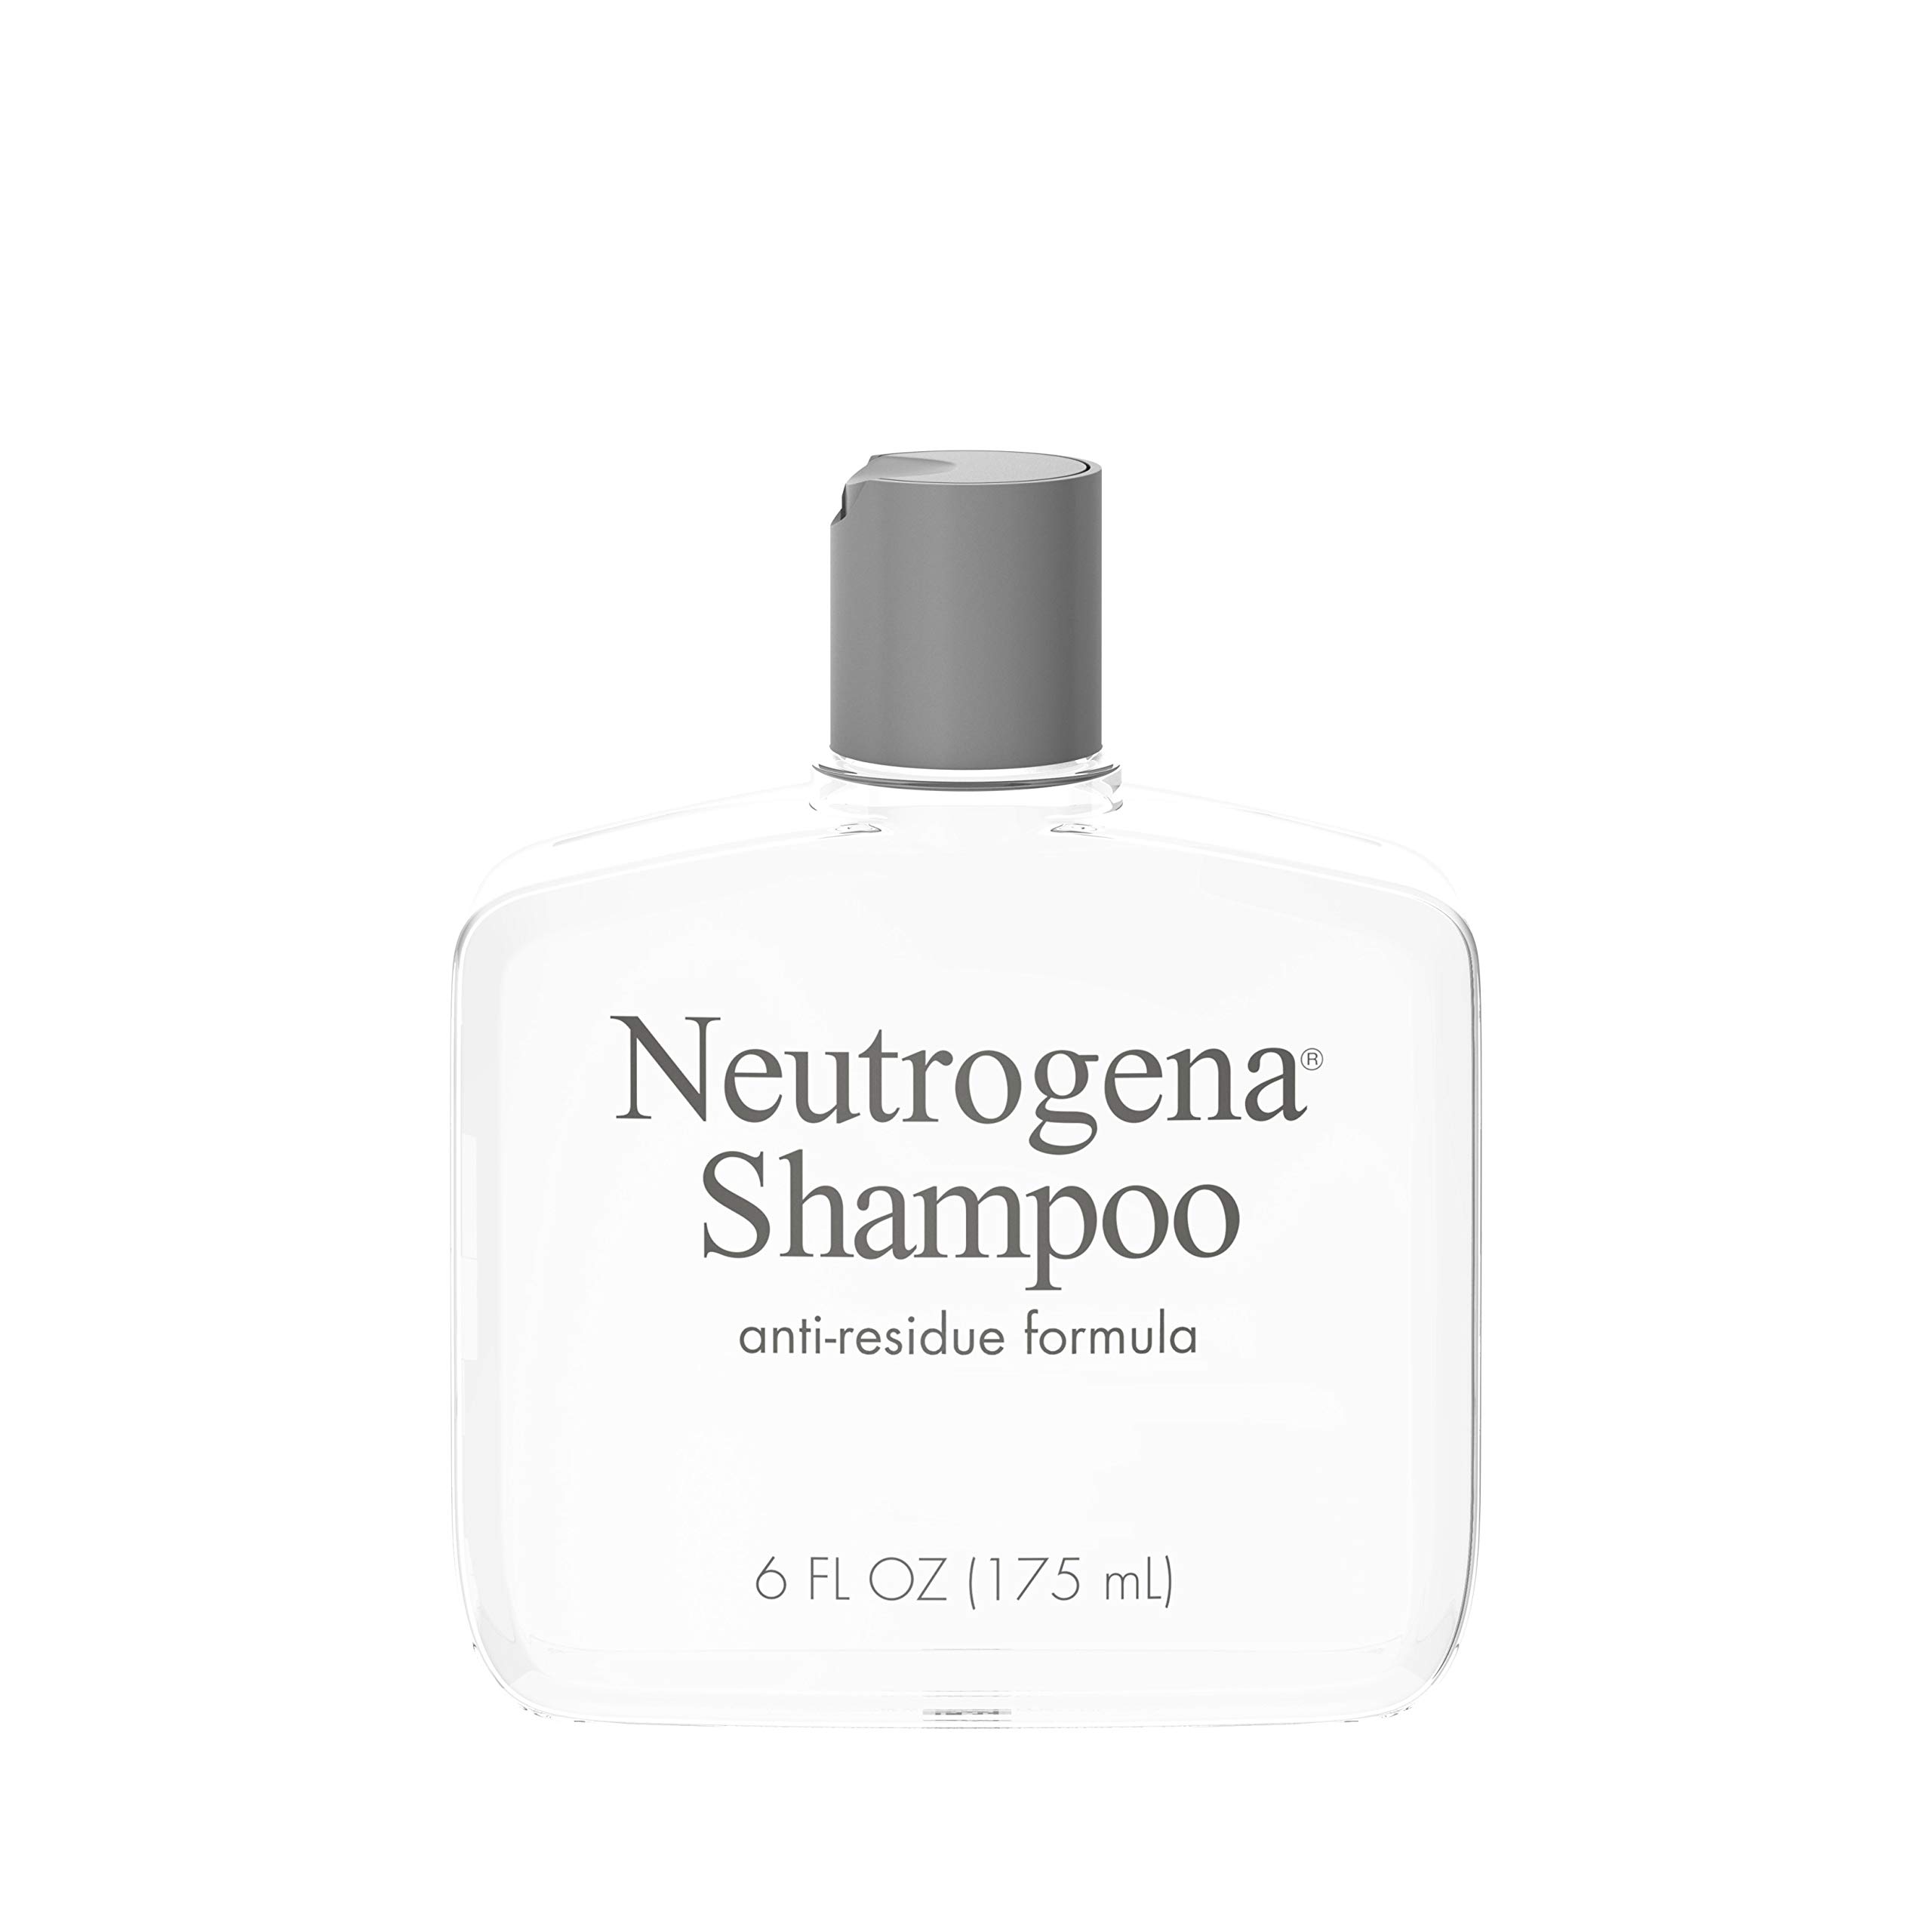 Neutrogena Shampoo Anti-Residue Formula 175 ml (並行輸入品)